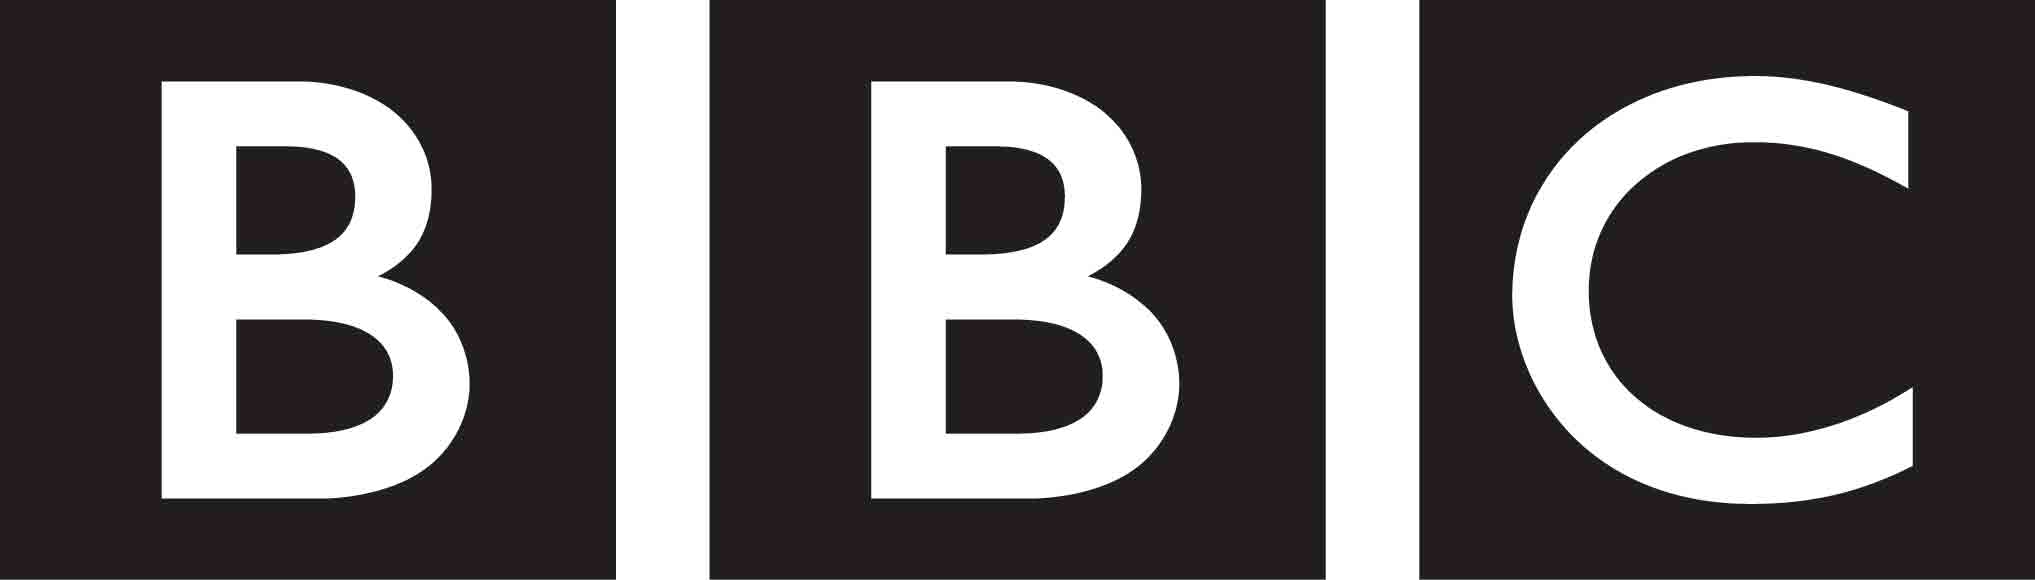 BBC-logo